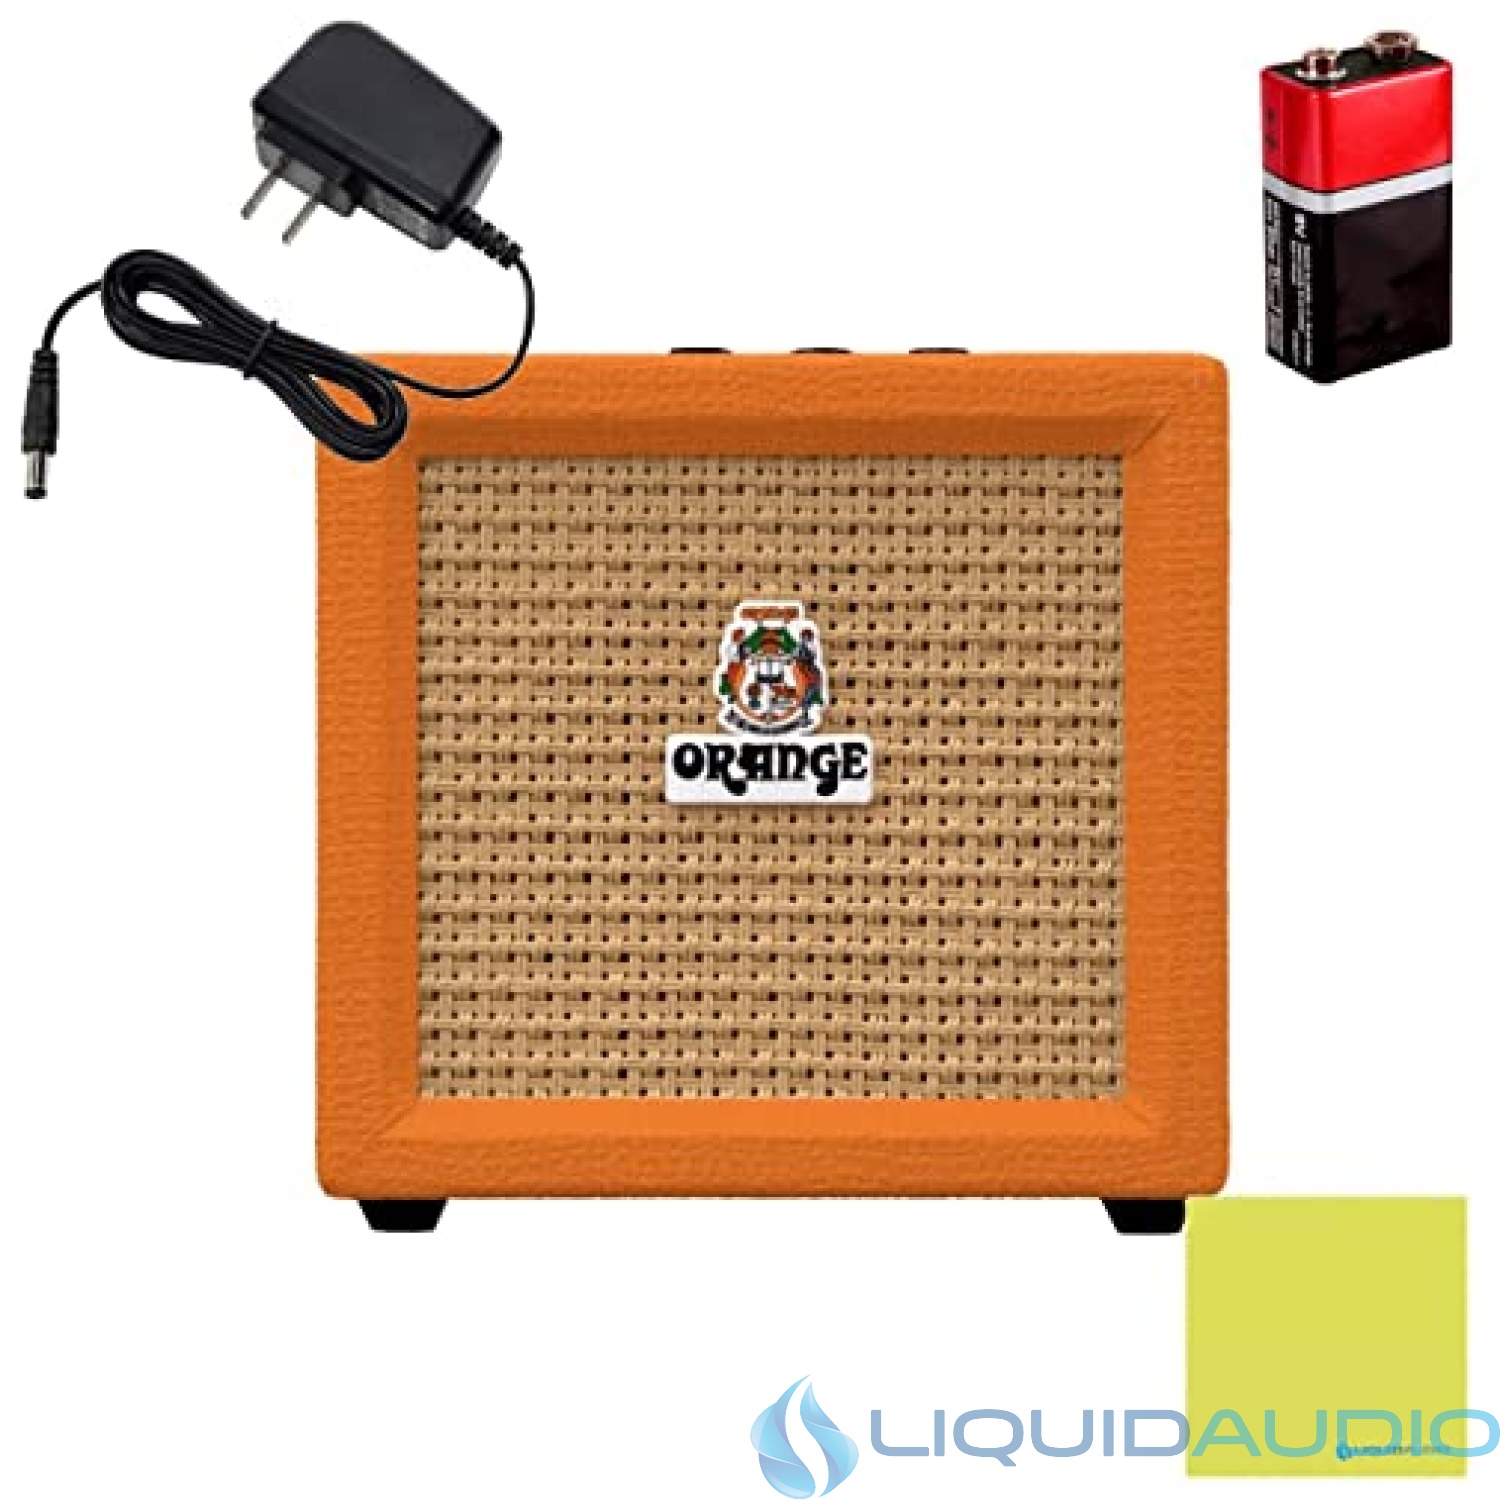 Orange Amps Crush Mini 3W Guitar Combo Amplifier Bundle with Liquid Audio 9V Power Supply AC Adapter & Polishing Cloth (4 Items)